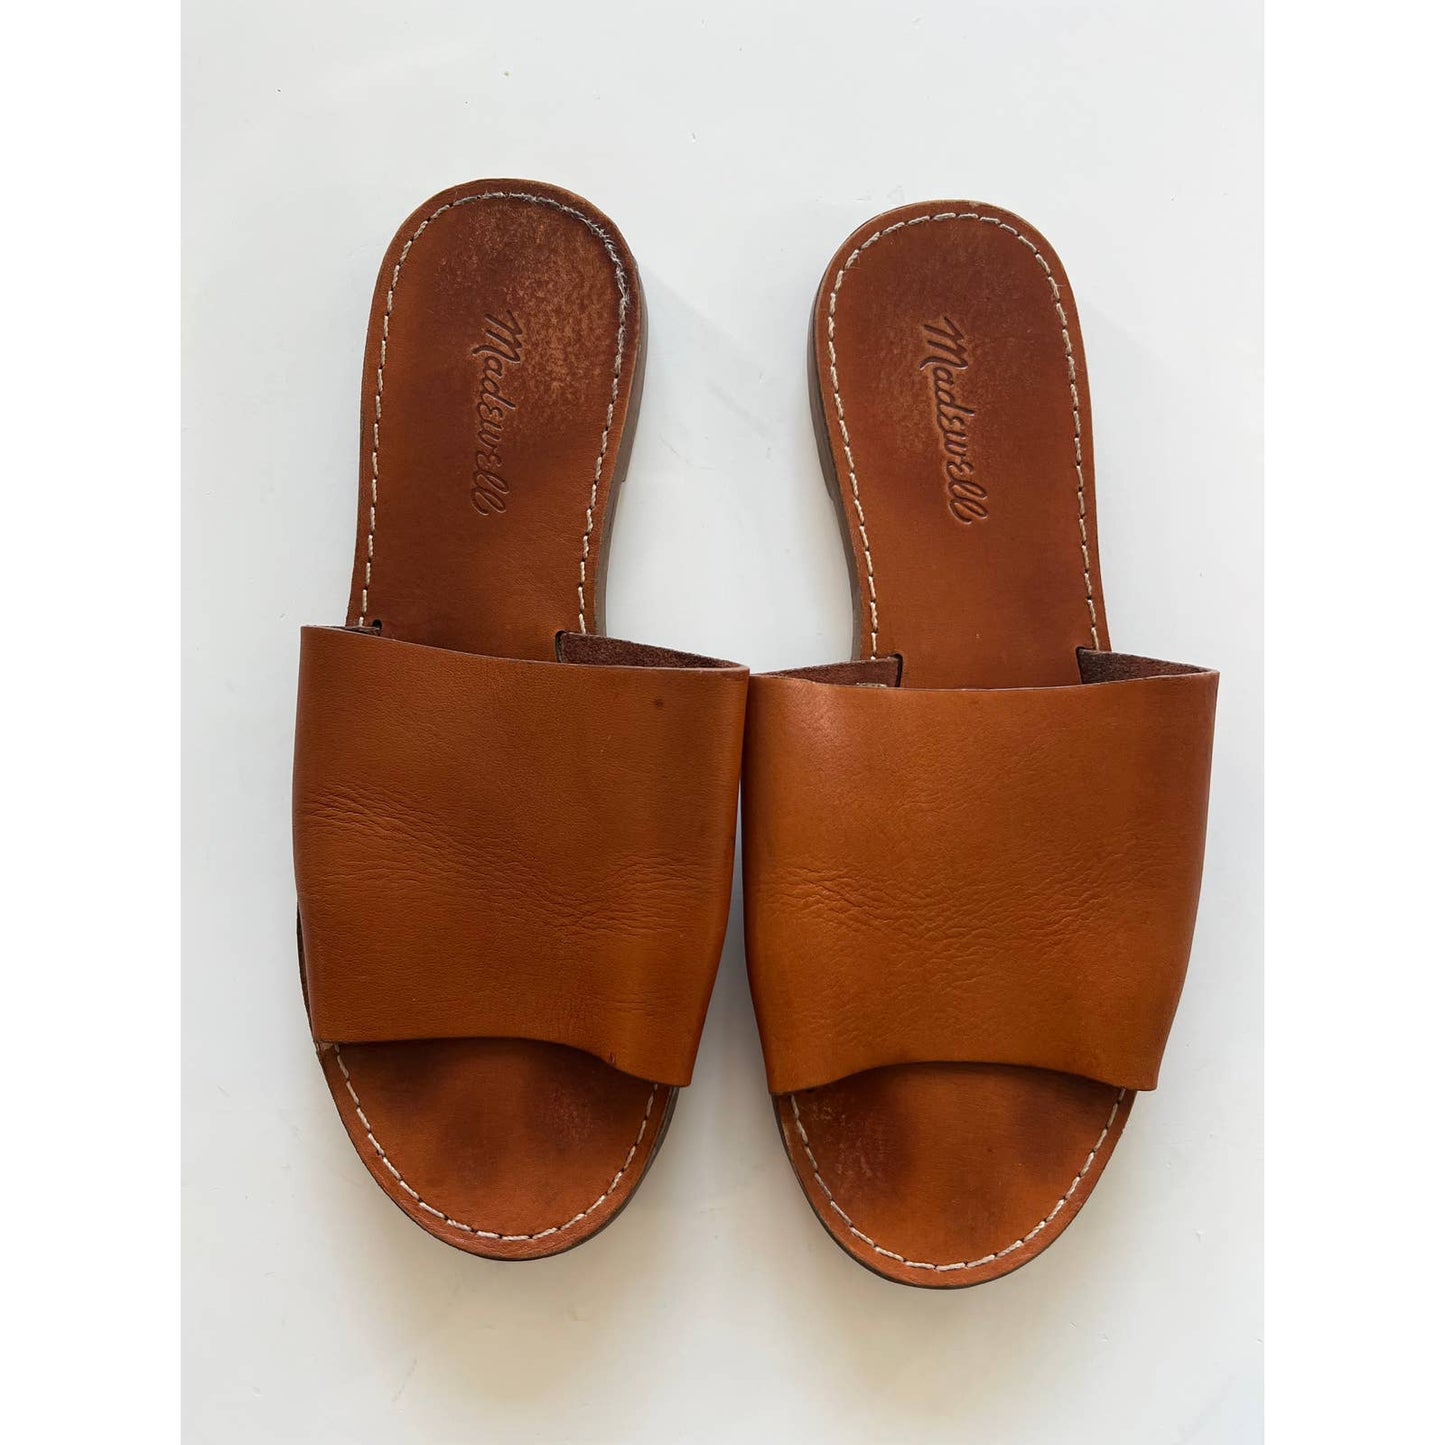 Madewell Brown Leather Boardwalk Slide Sandal Shoes E8249